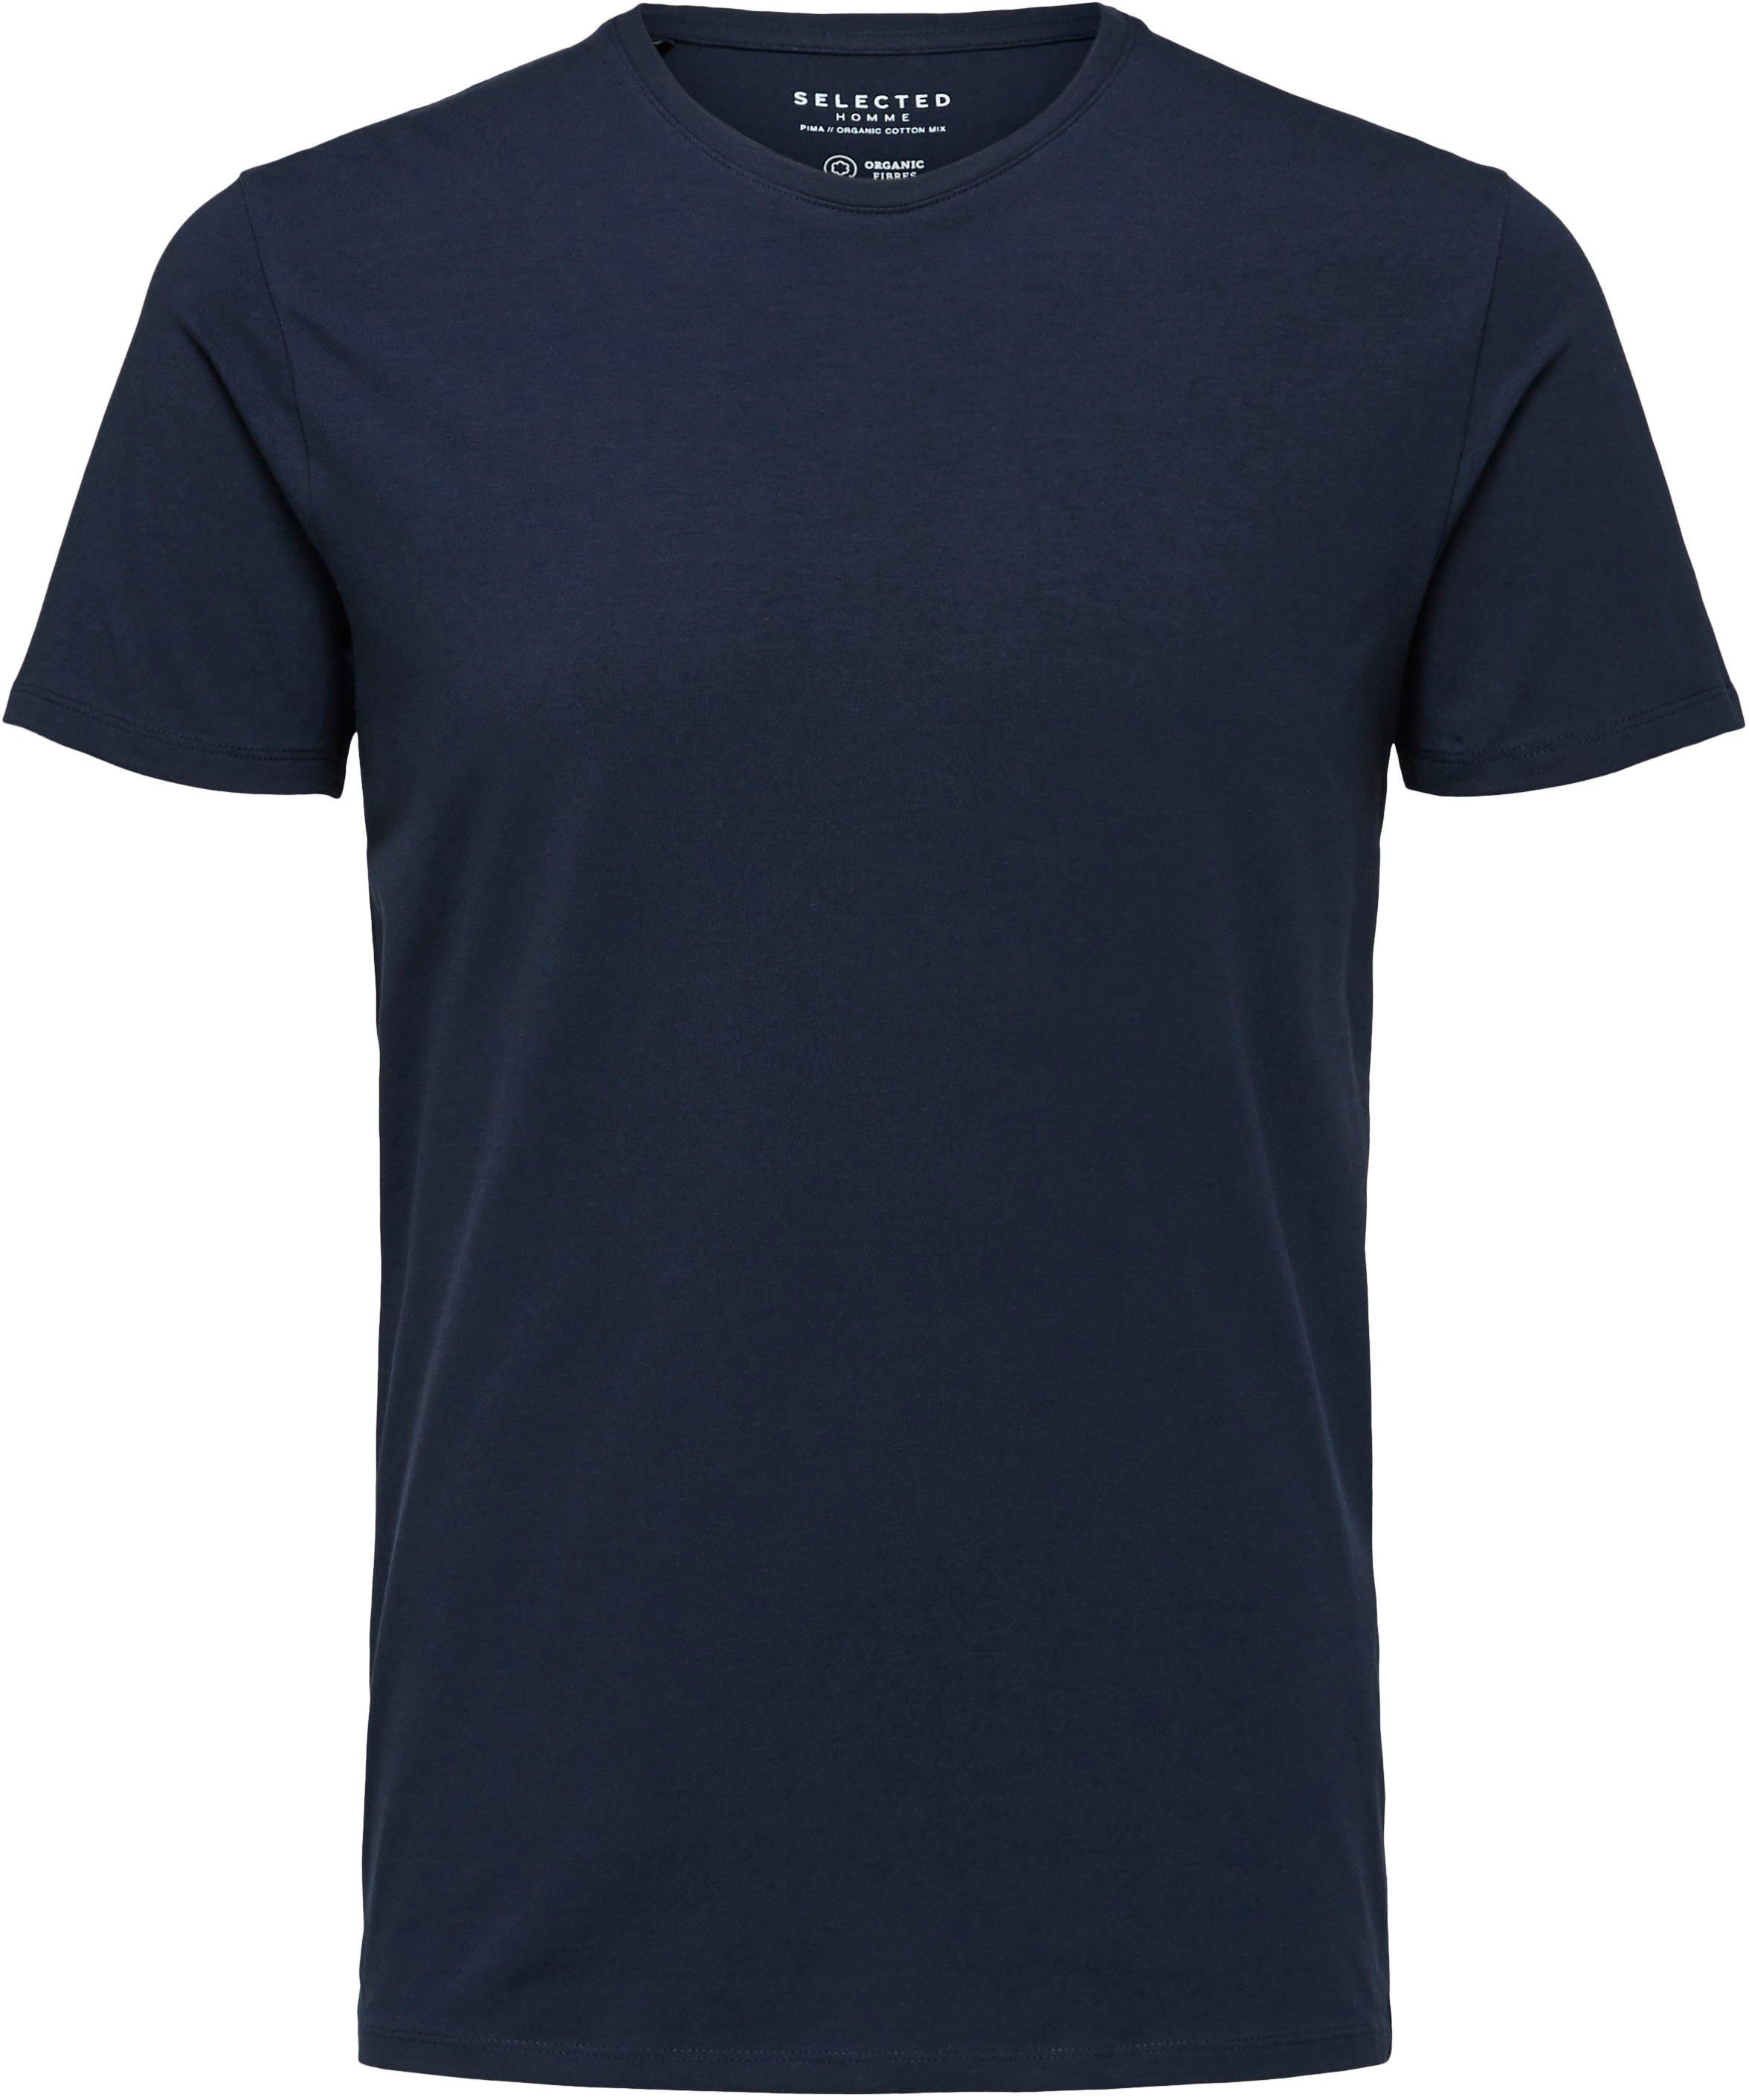 SELECTED HOMME Rundhalsshirt navy Basic T-Shirt blazer